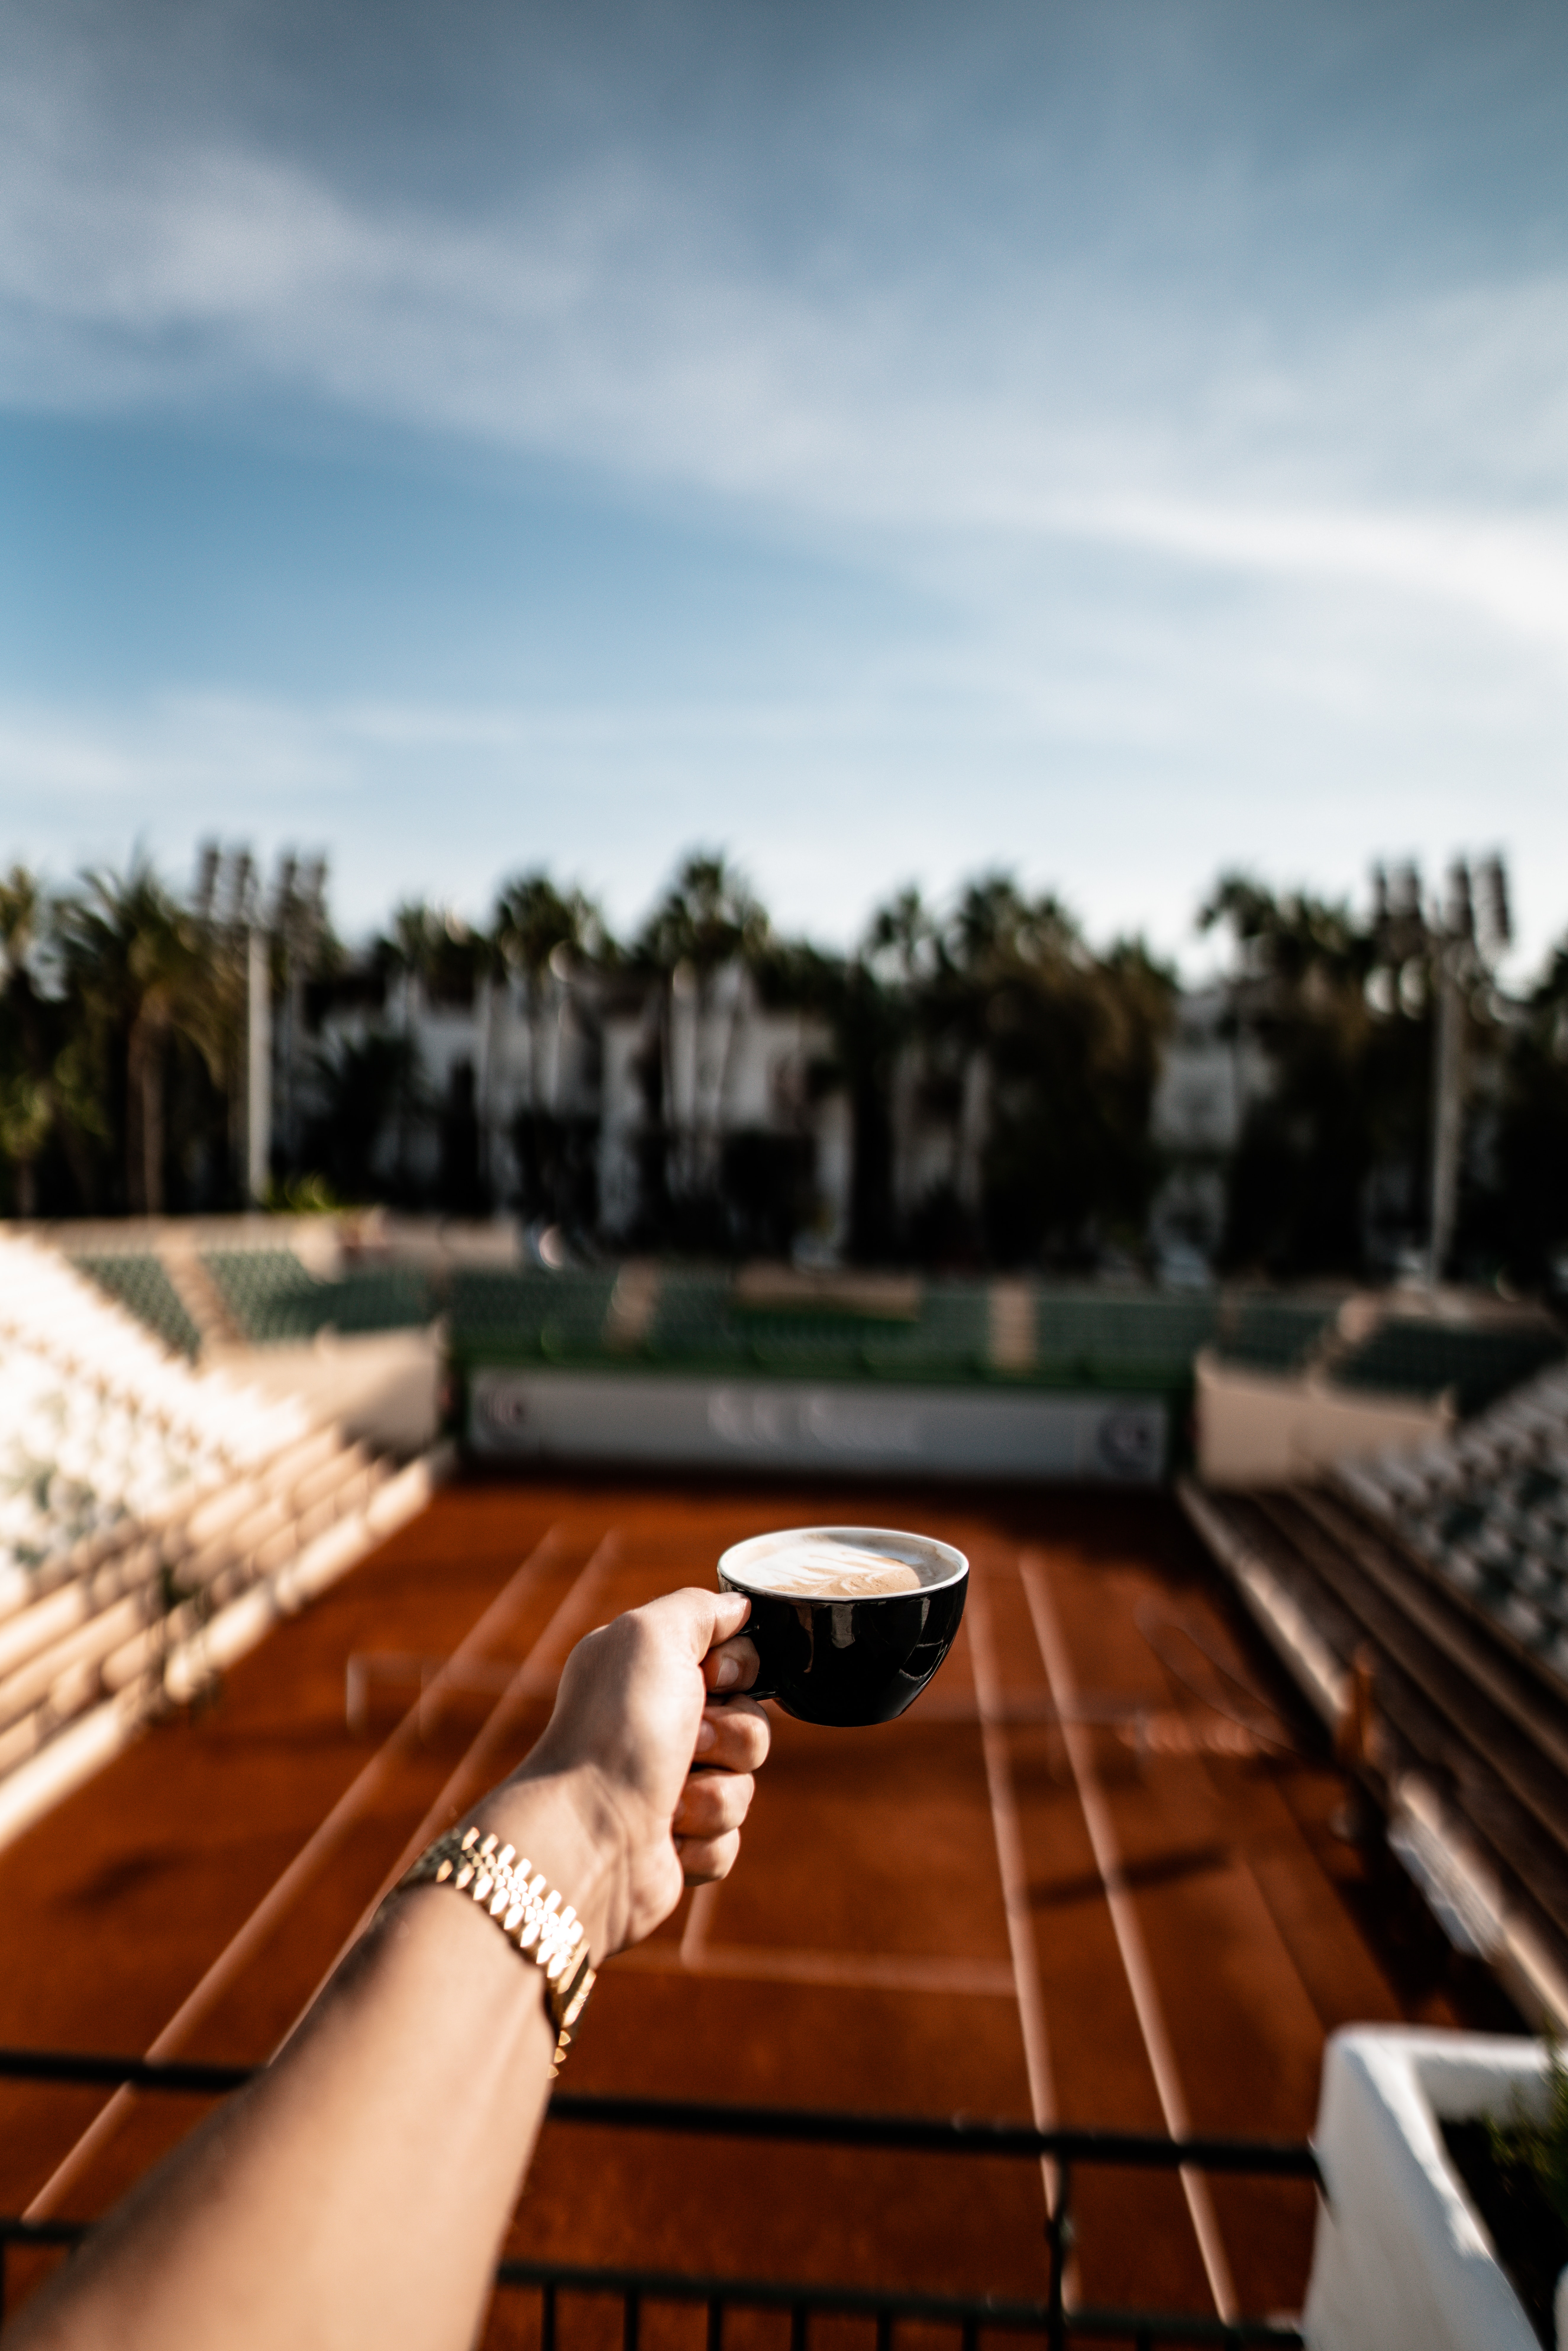 desktop Images miscellanea, coffee, hand, miscellaneous, cup, tennis court